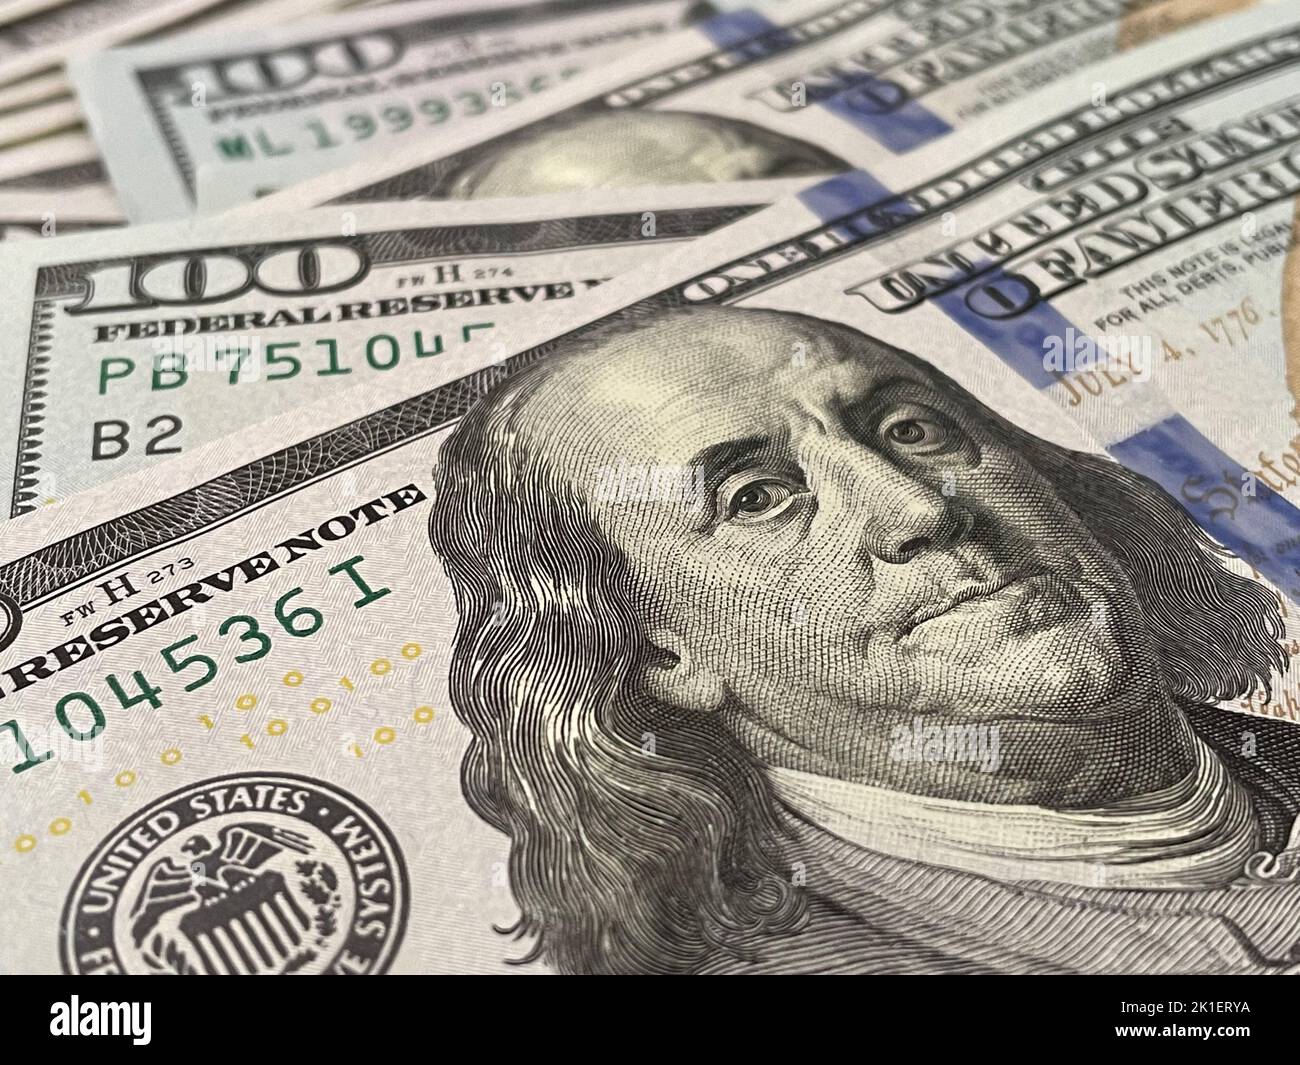 US dollars. Money concept. Hundred dollars banknotes Stock Photo